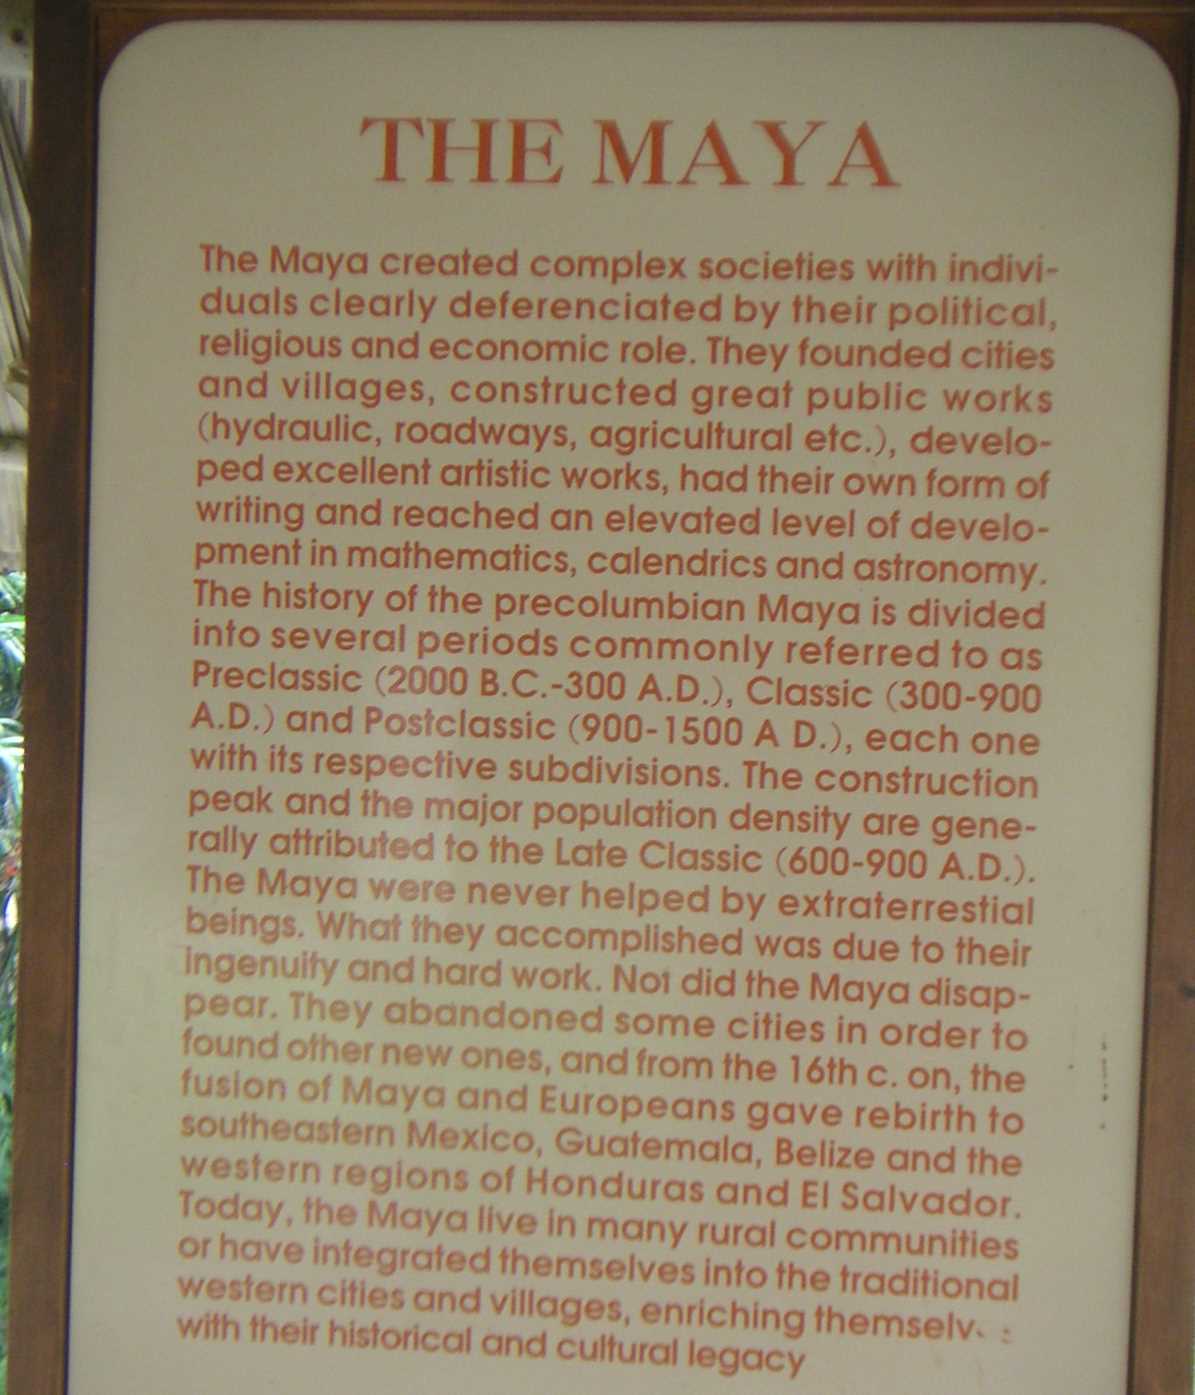 PICT
0050 history of Maya
